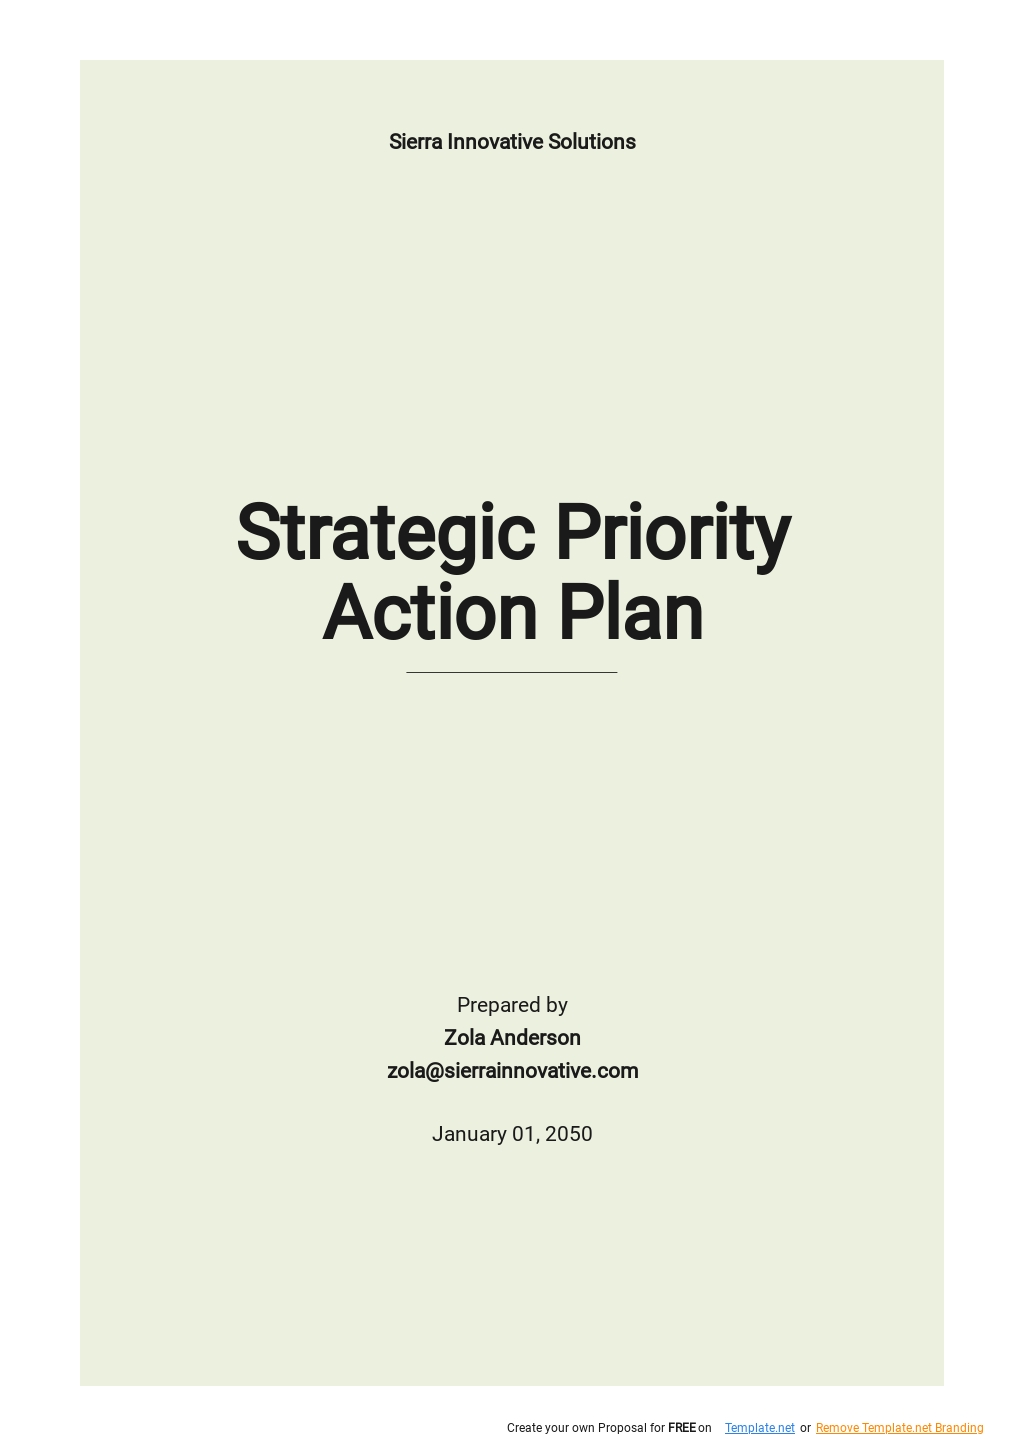 Strategic Action Plans